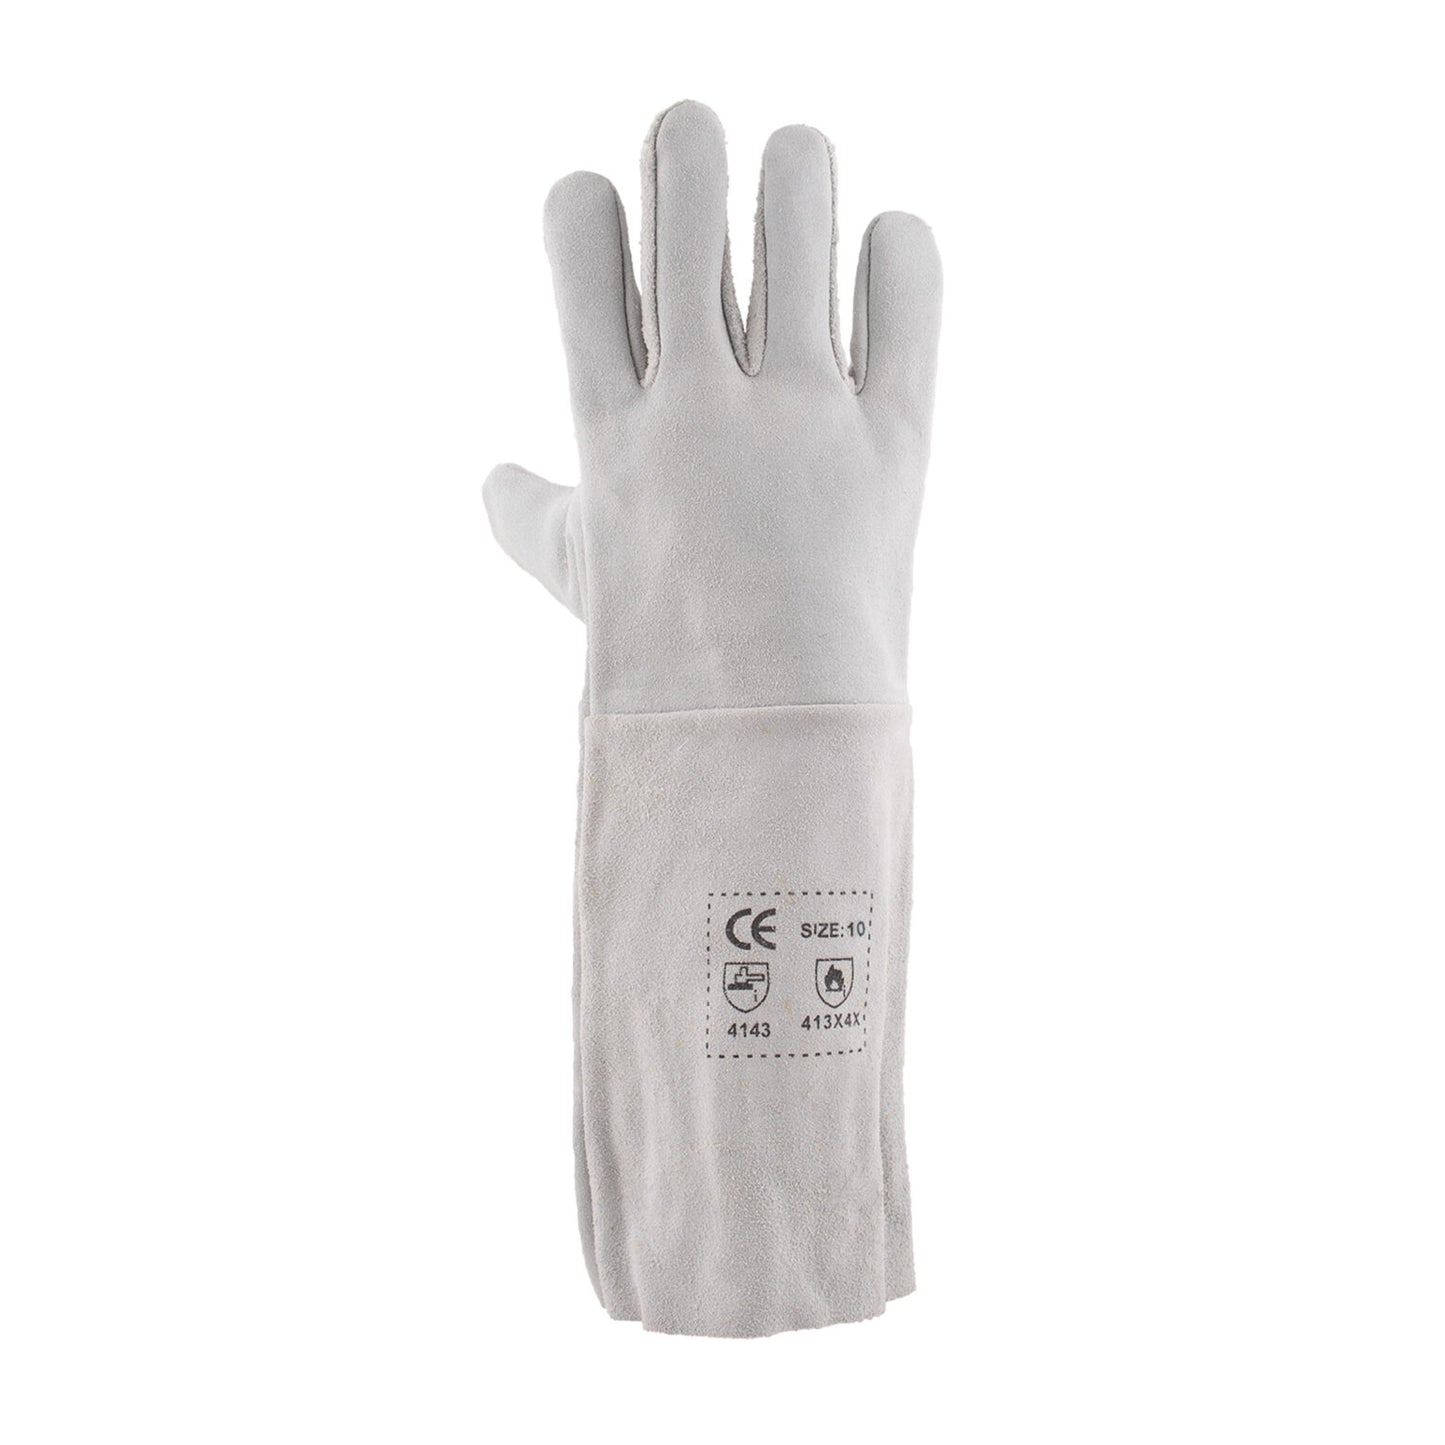 Chrome Leather Gloves Elbow Length (12 Gloves)